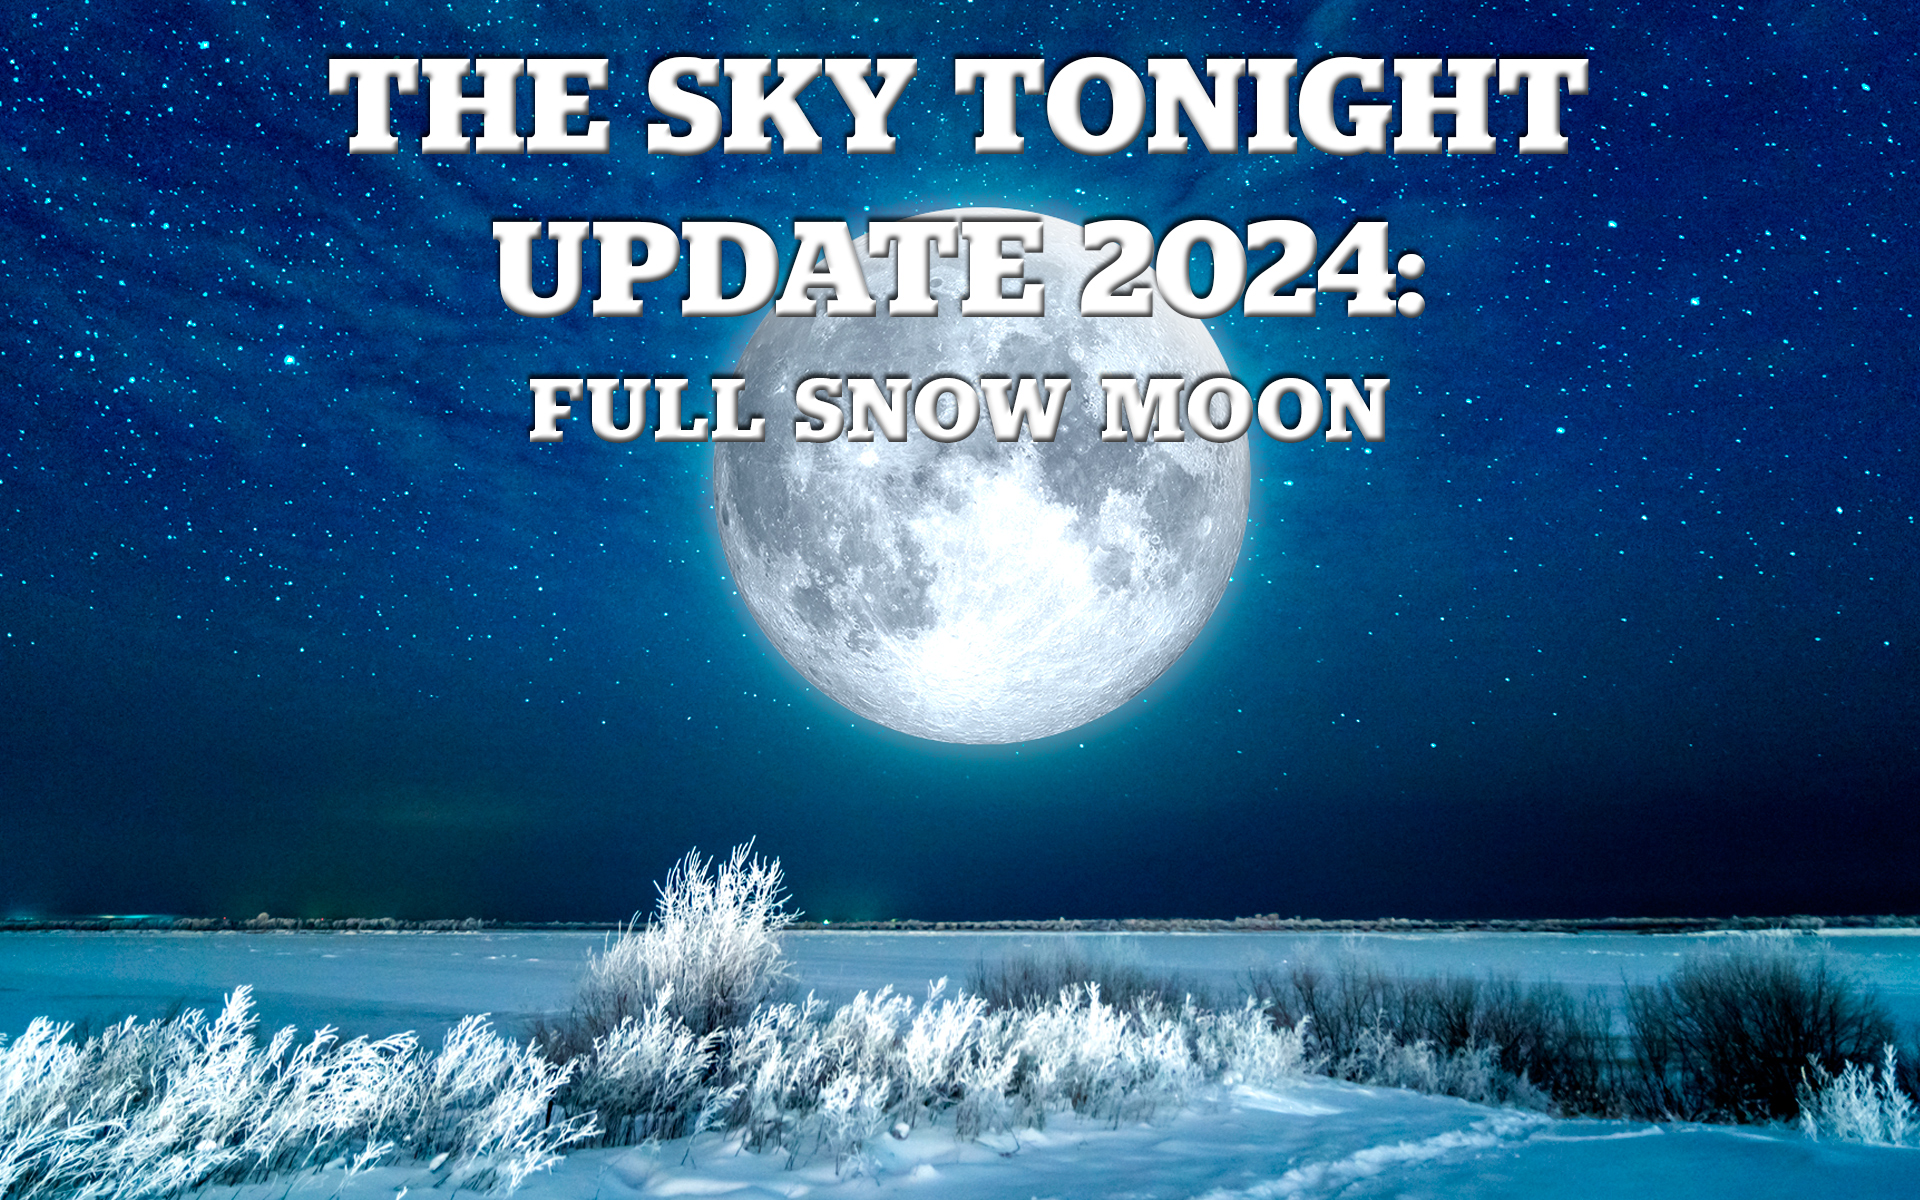 The Sky Tonight Update: Full Snow Moon